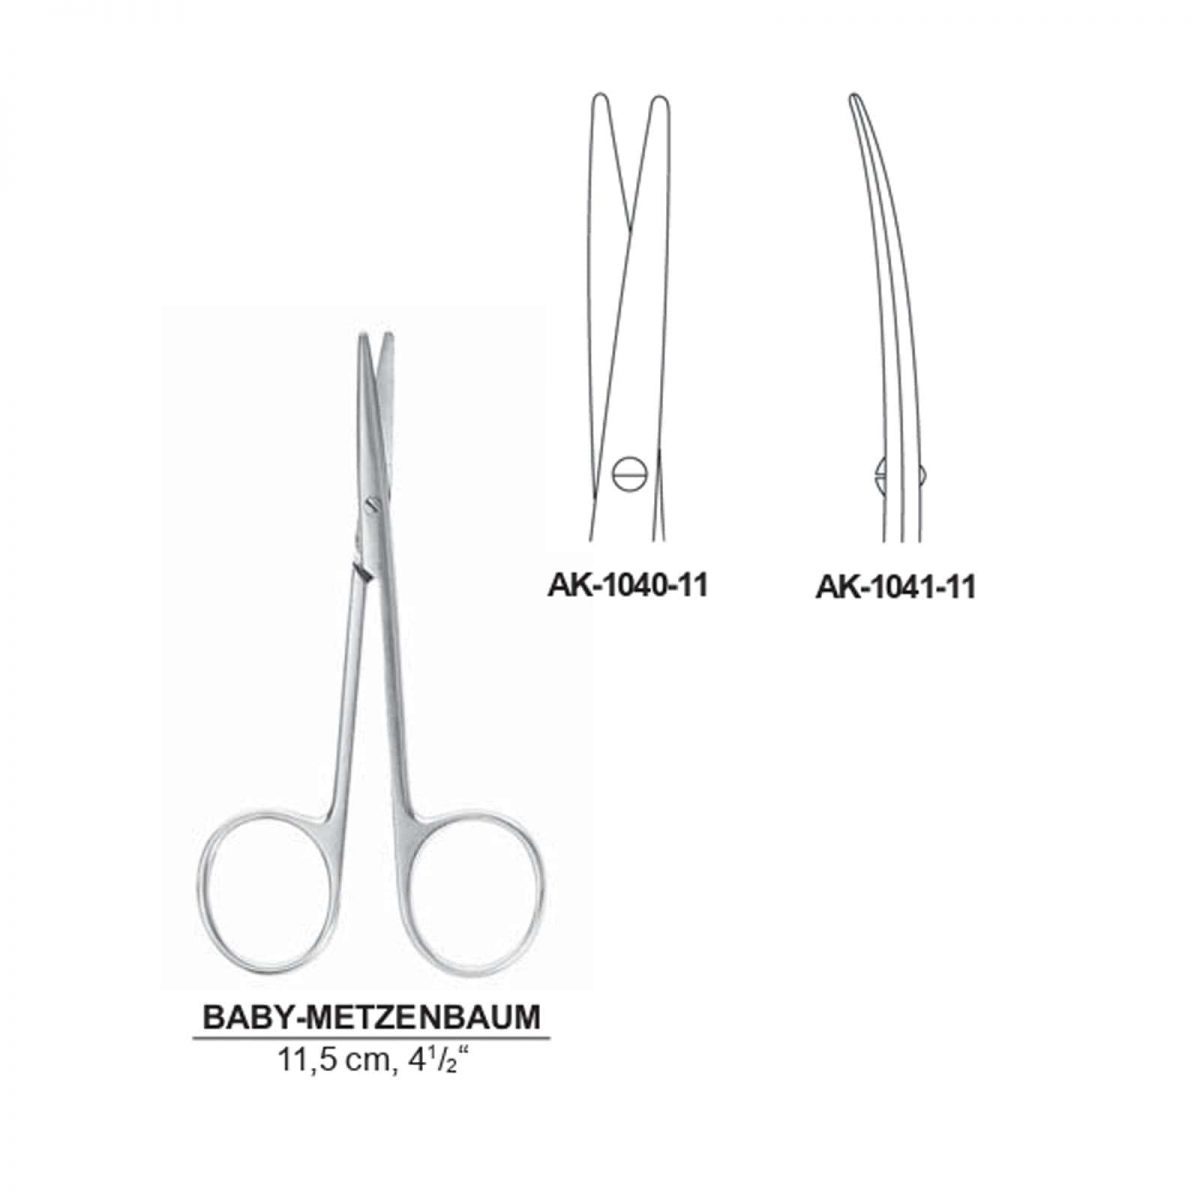 Baby Metzenbaum Dissecting Scissors